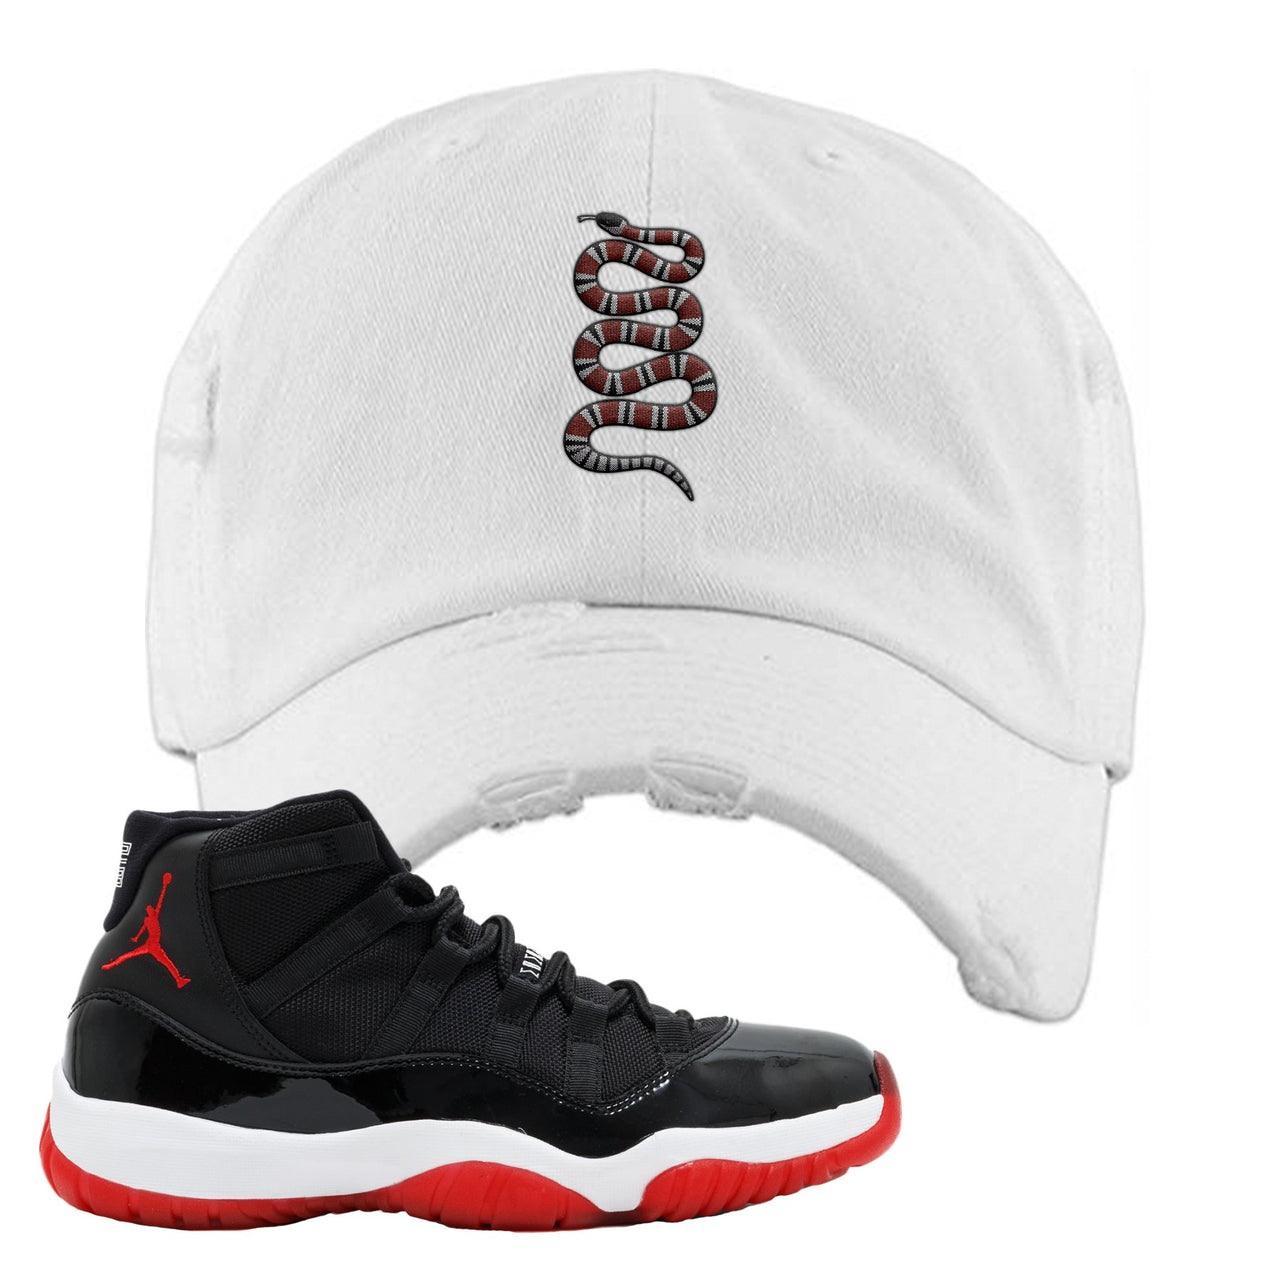 Jordan 11 Bred Coiled Snake White Sneaker Hook Up Distressed Dad Hat